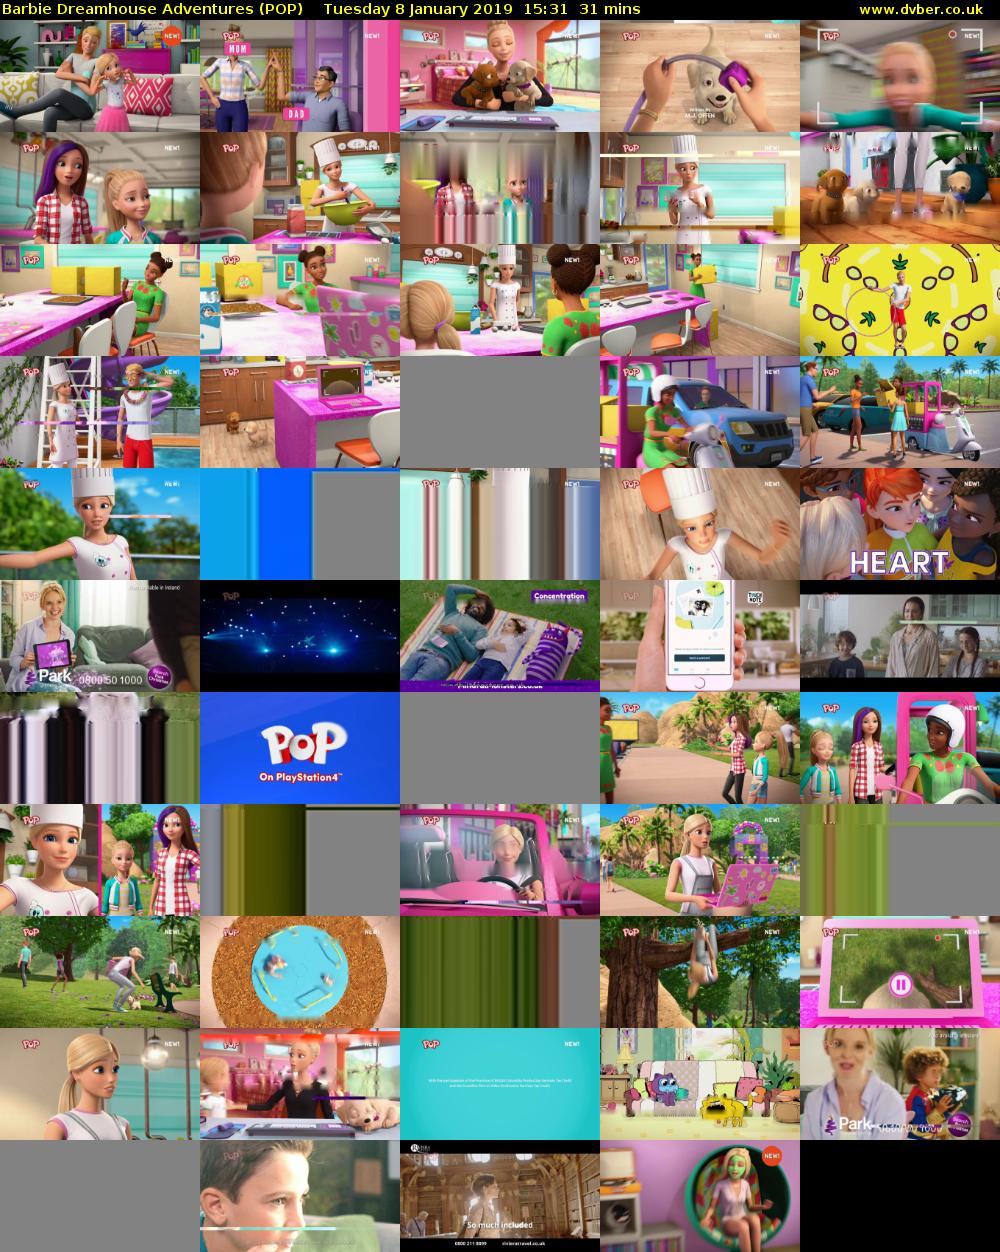 Barbie Dreamhouse Adventures (POP) Tuesday 8 January 2019 15:31 - 16:02